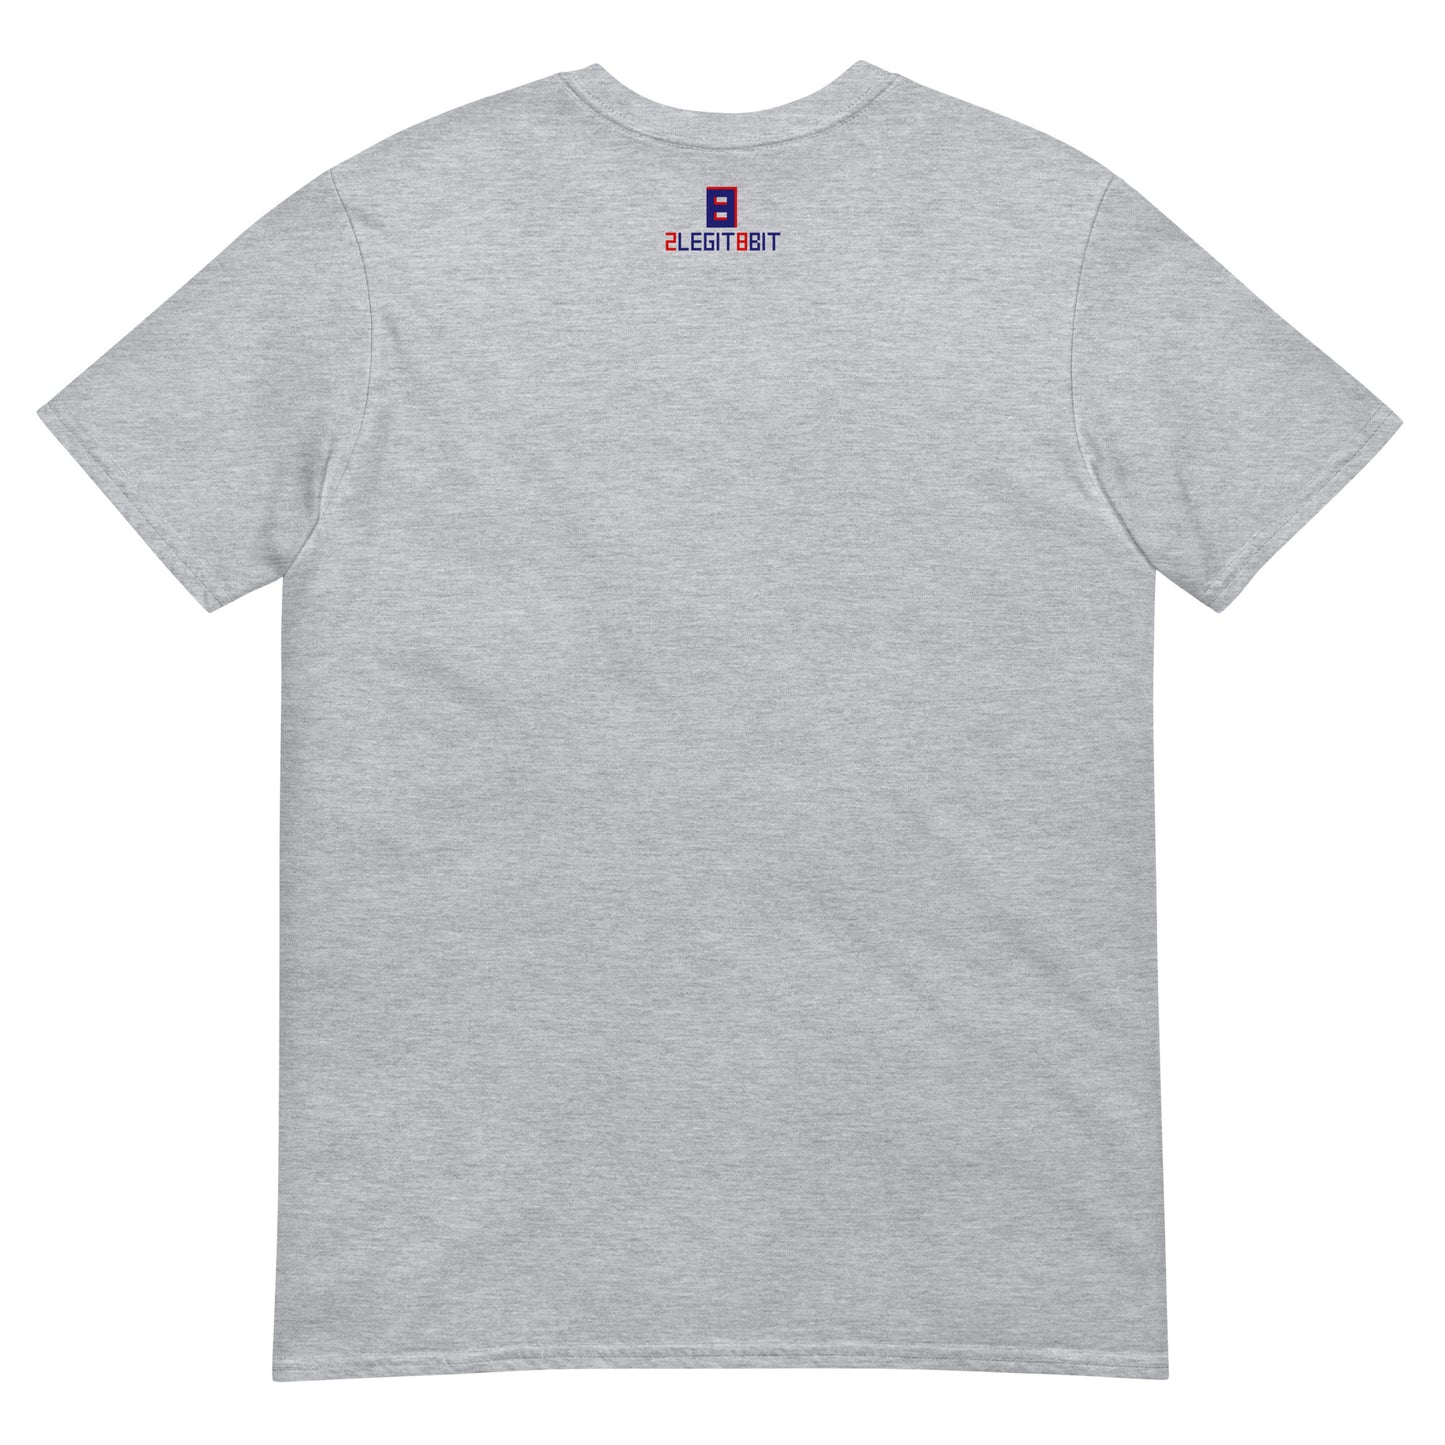 Piqua Pride Short-Sleeve Unisex T-Shirt